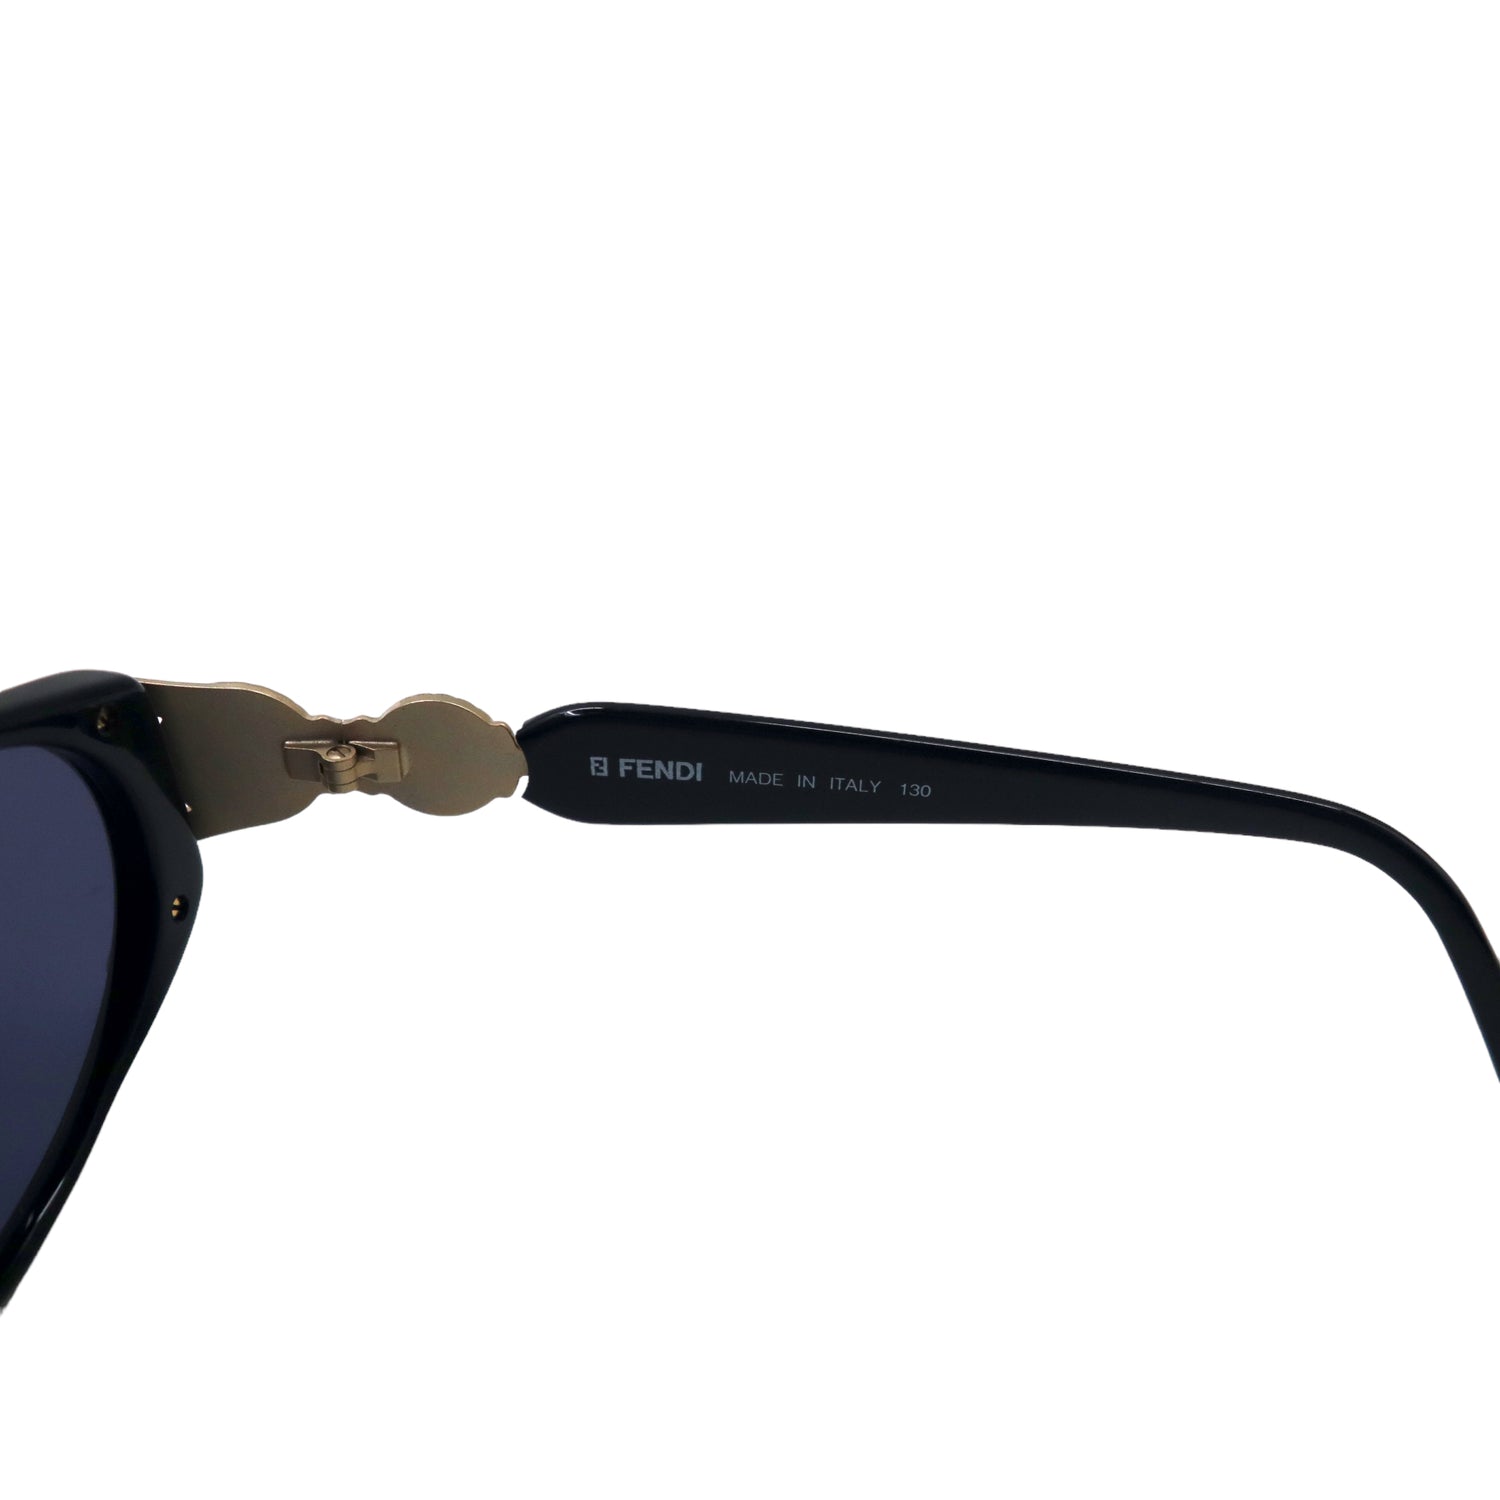 FENDI Sunglasses Black Gold Side Logo Coin FS 138 Ebony 130